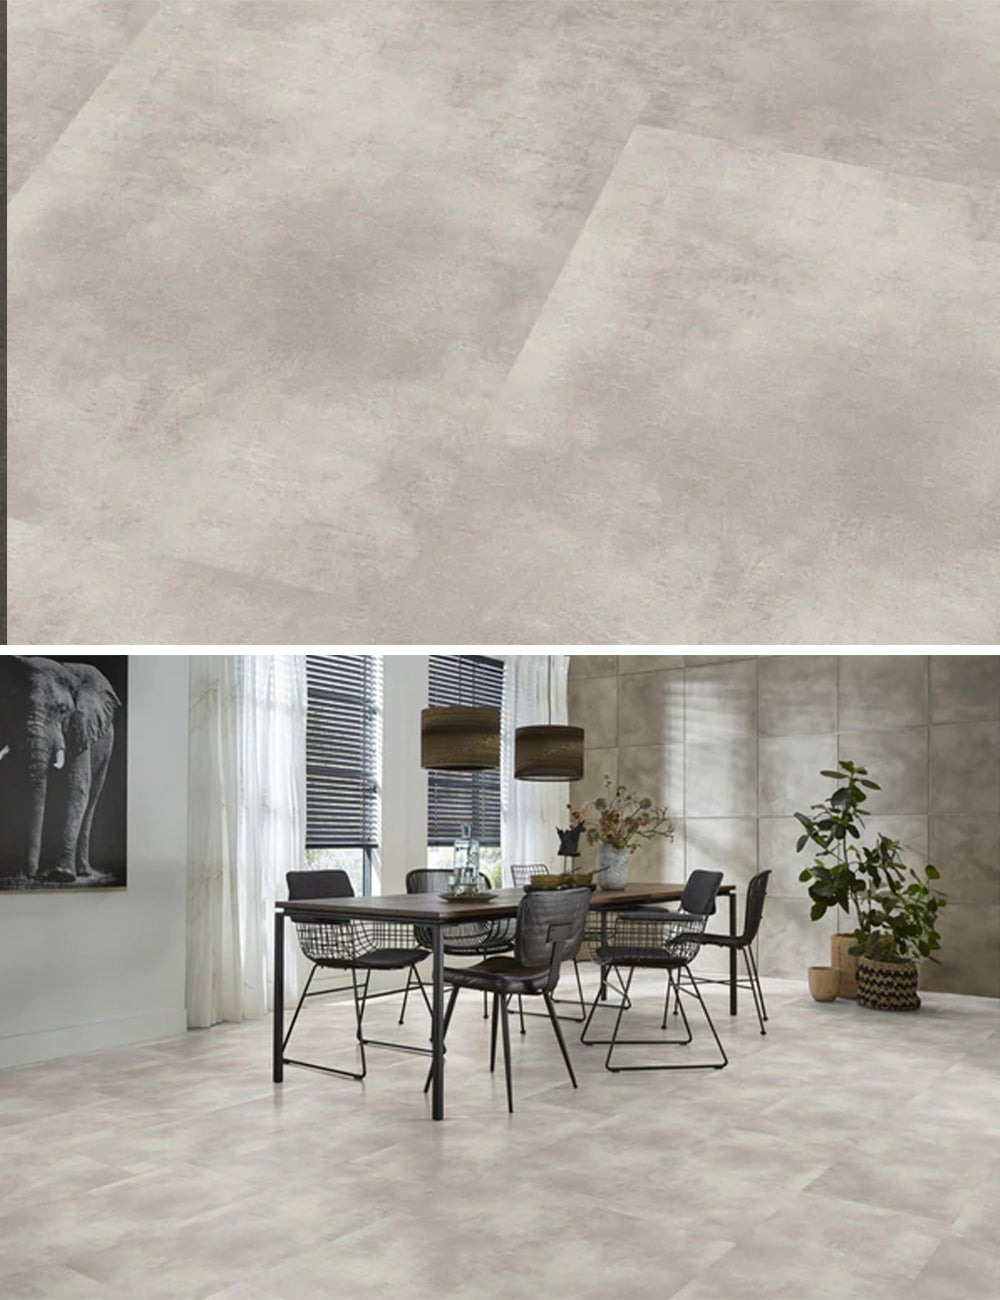 Floorlife The Rocks Off Grey 1116 Tile Dryback PVC - Solza.fr